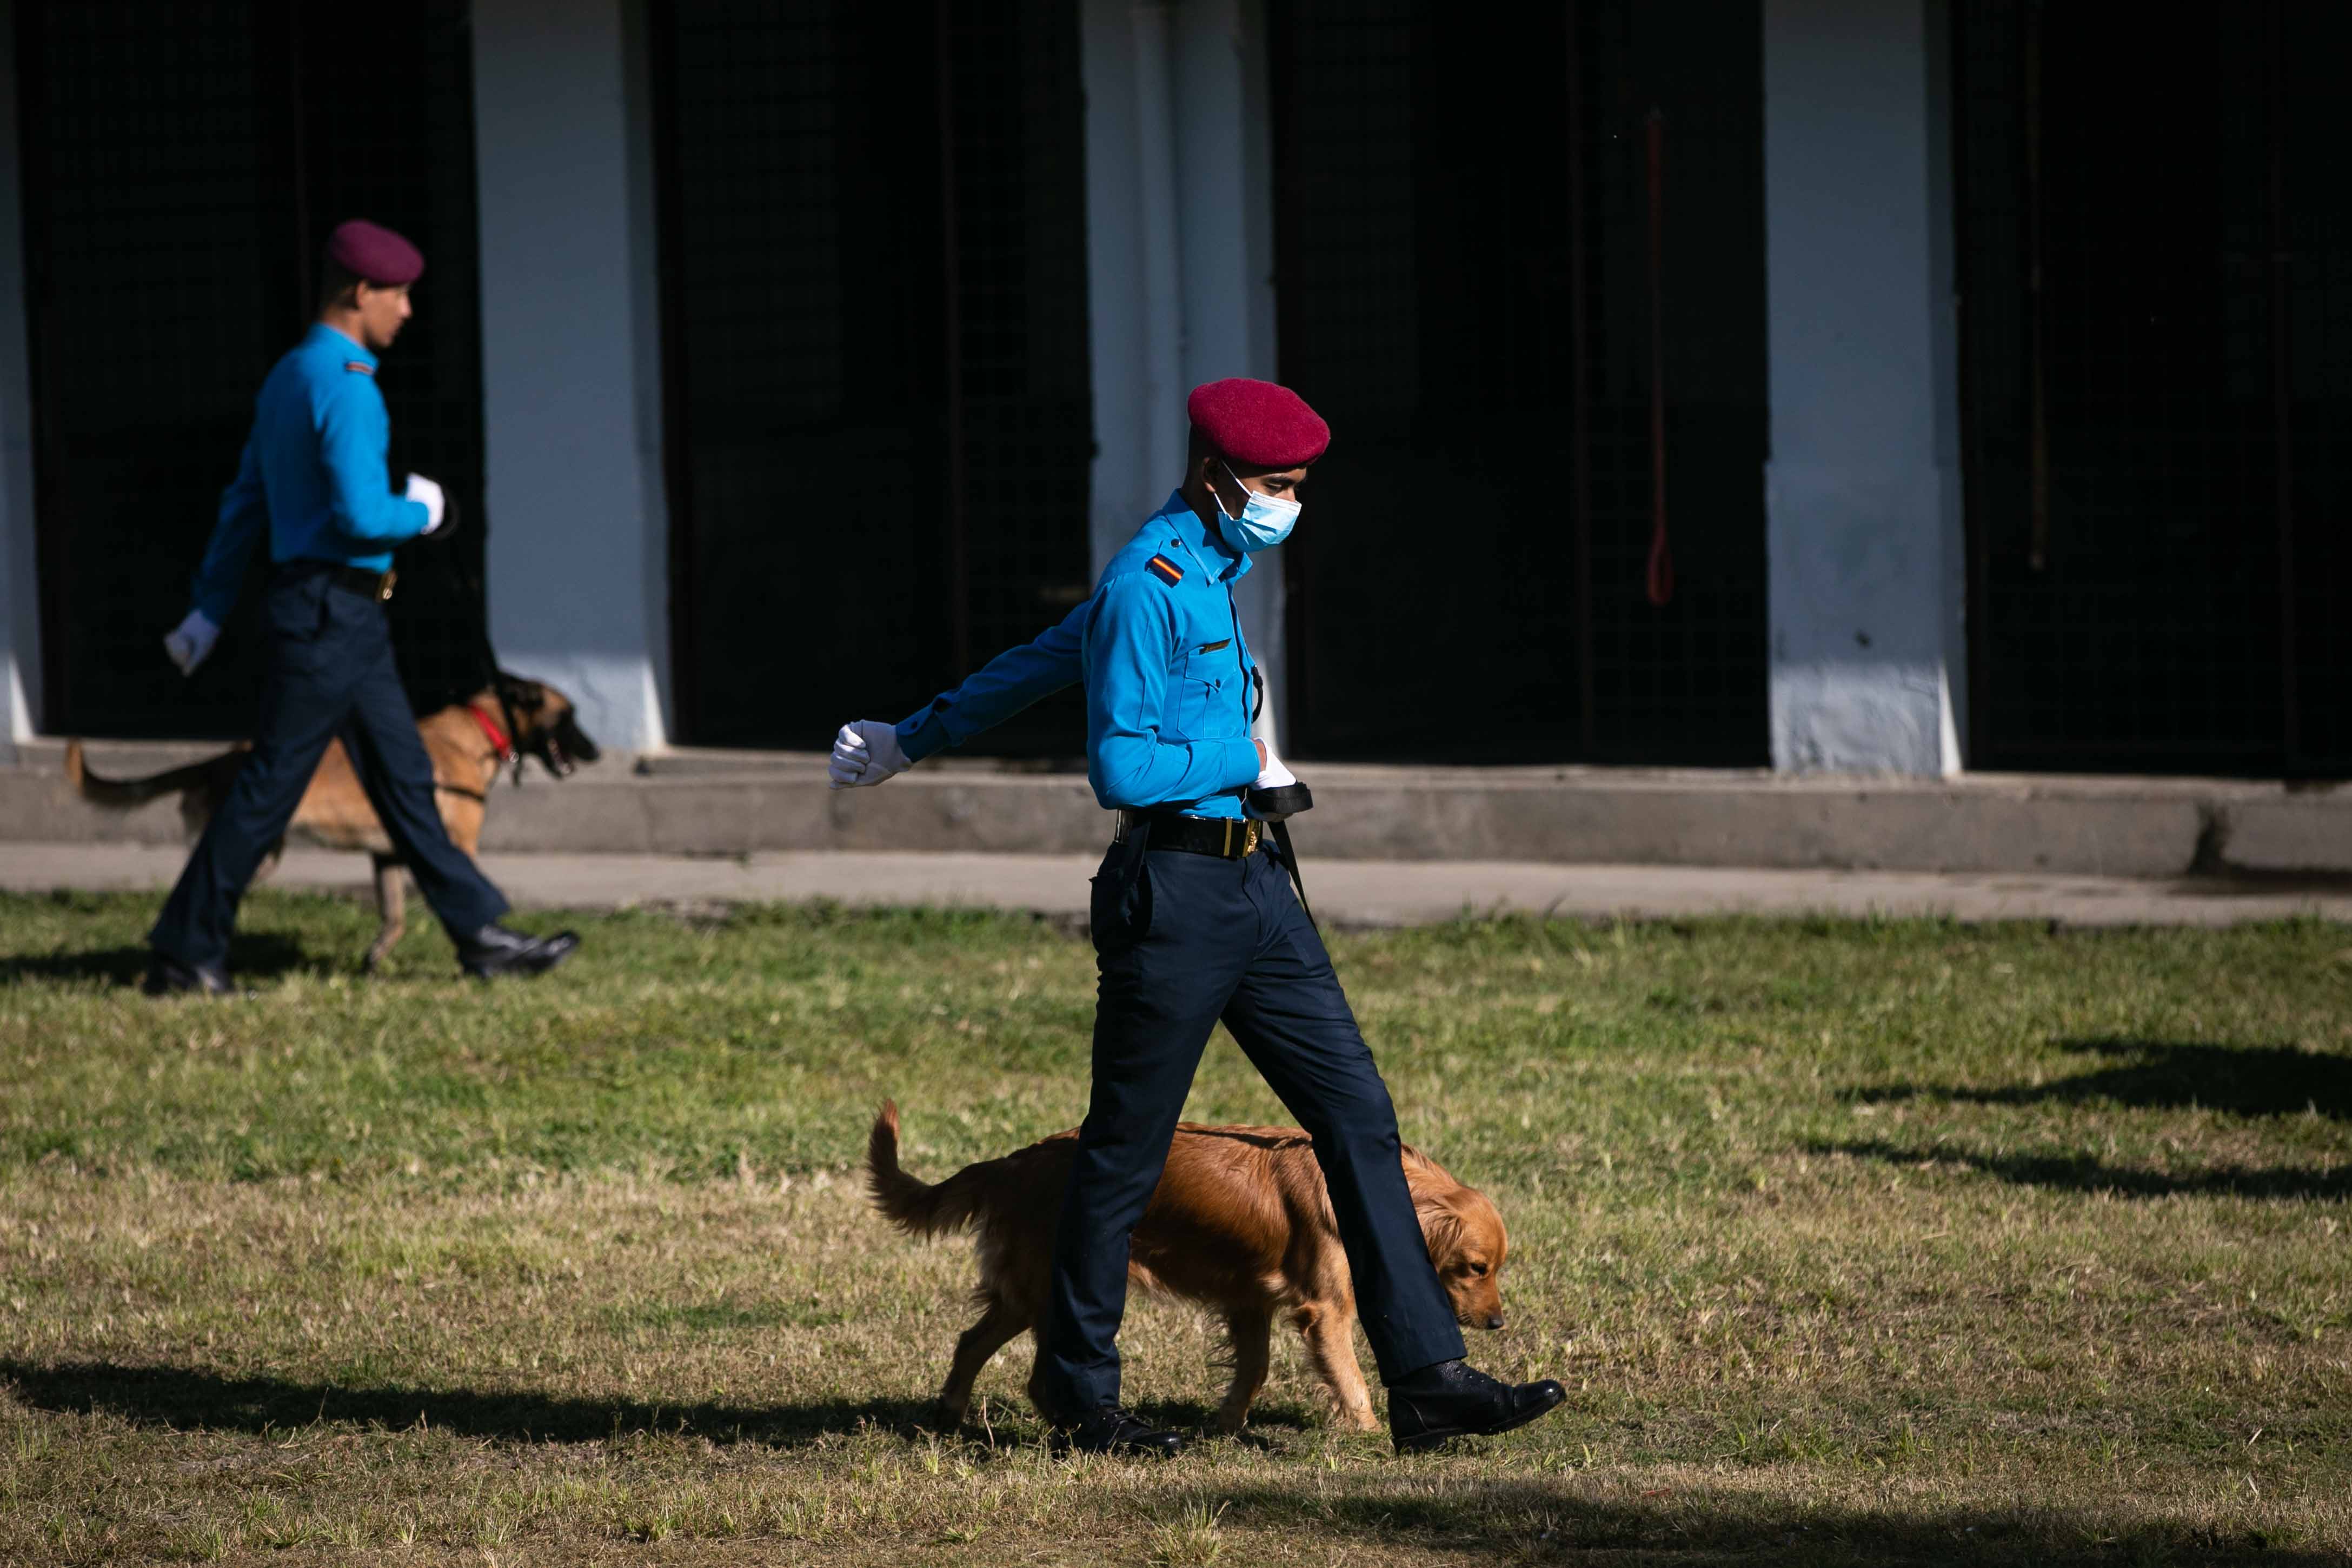 Nepal police dog festival-Nepal Photo Library  (7)1666603831.JPG